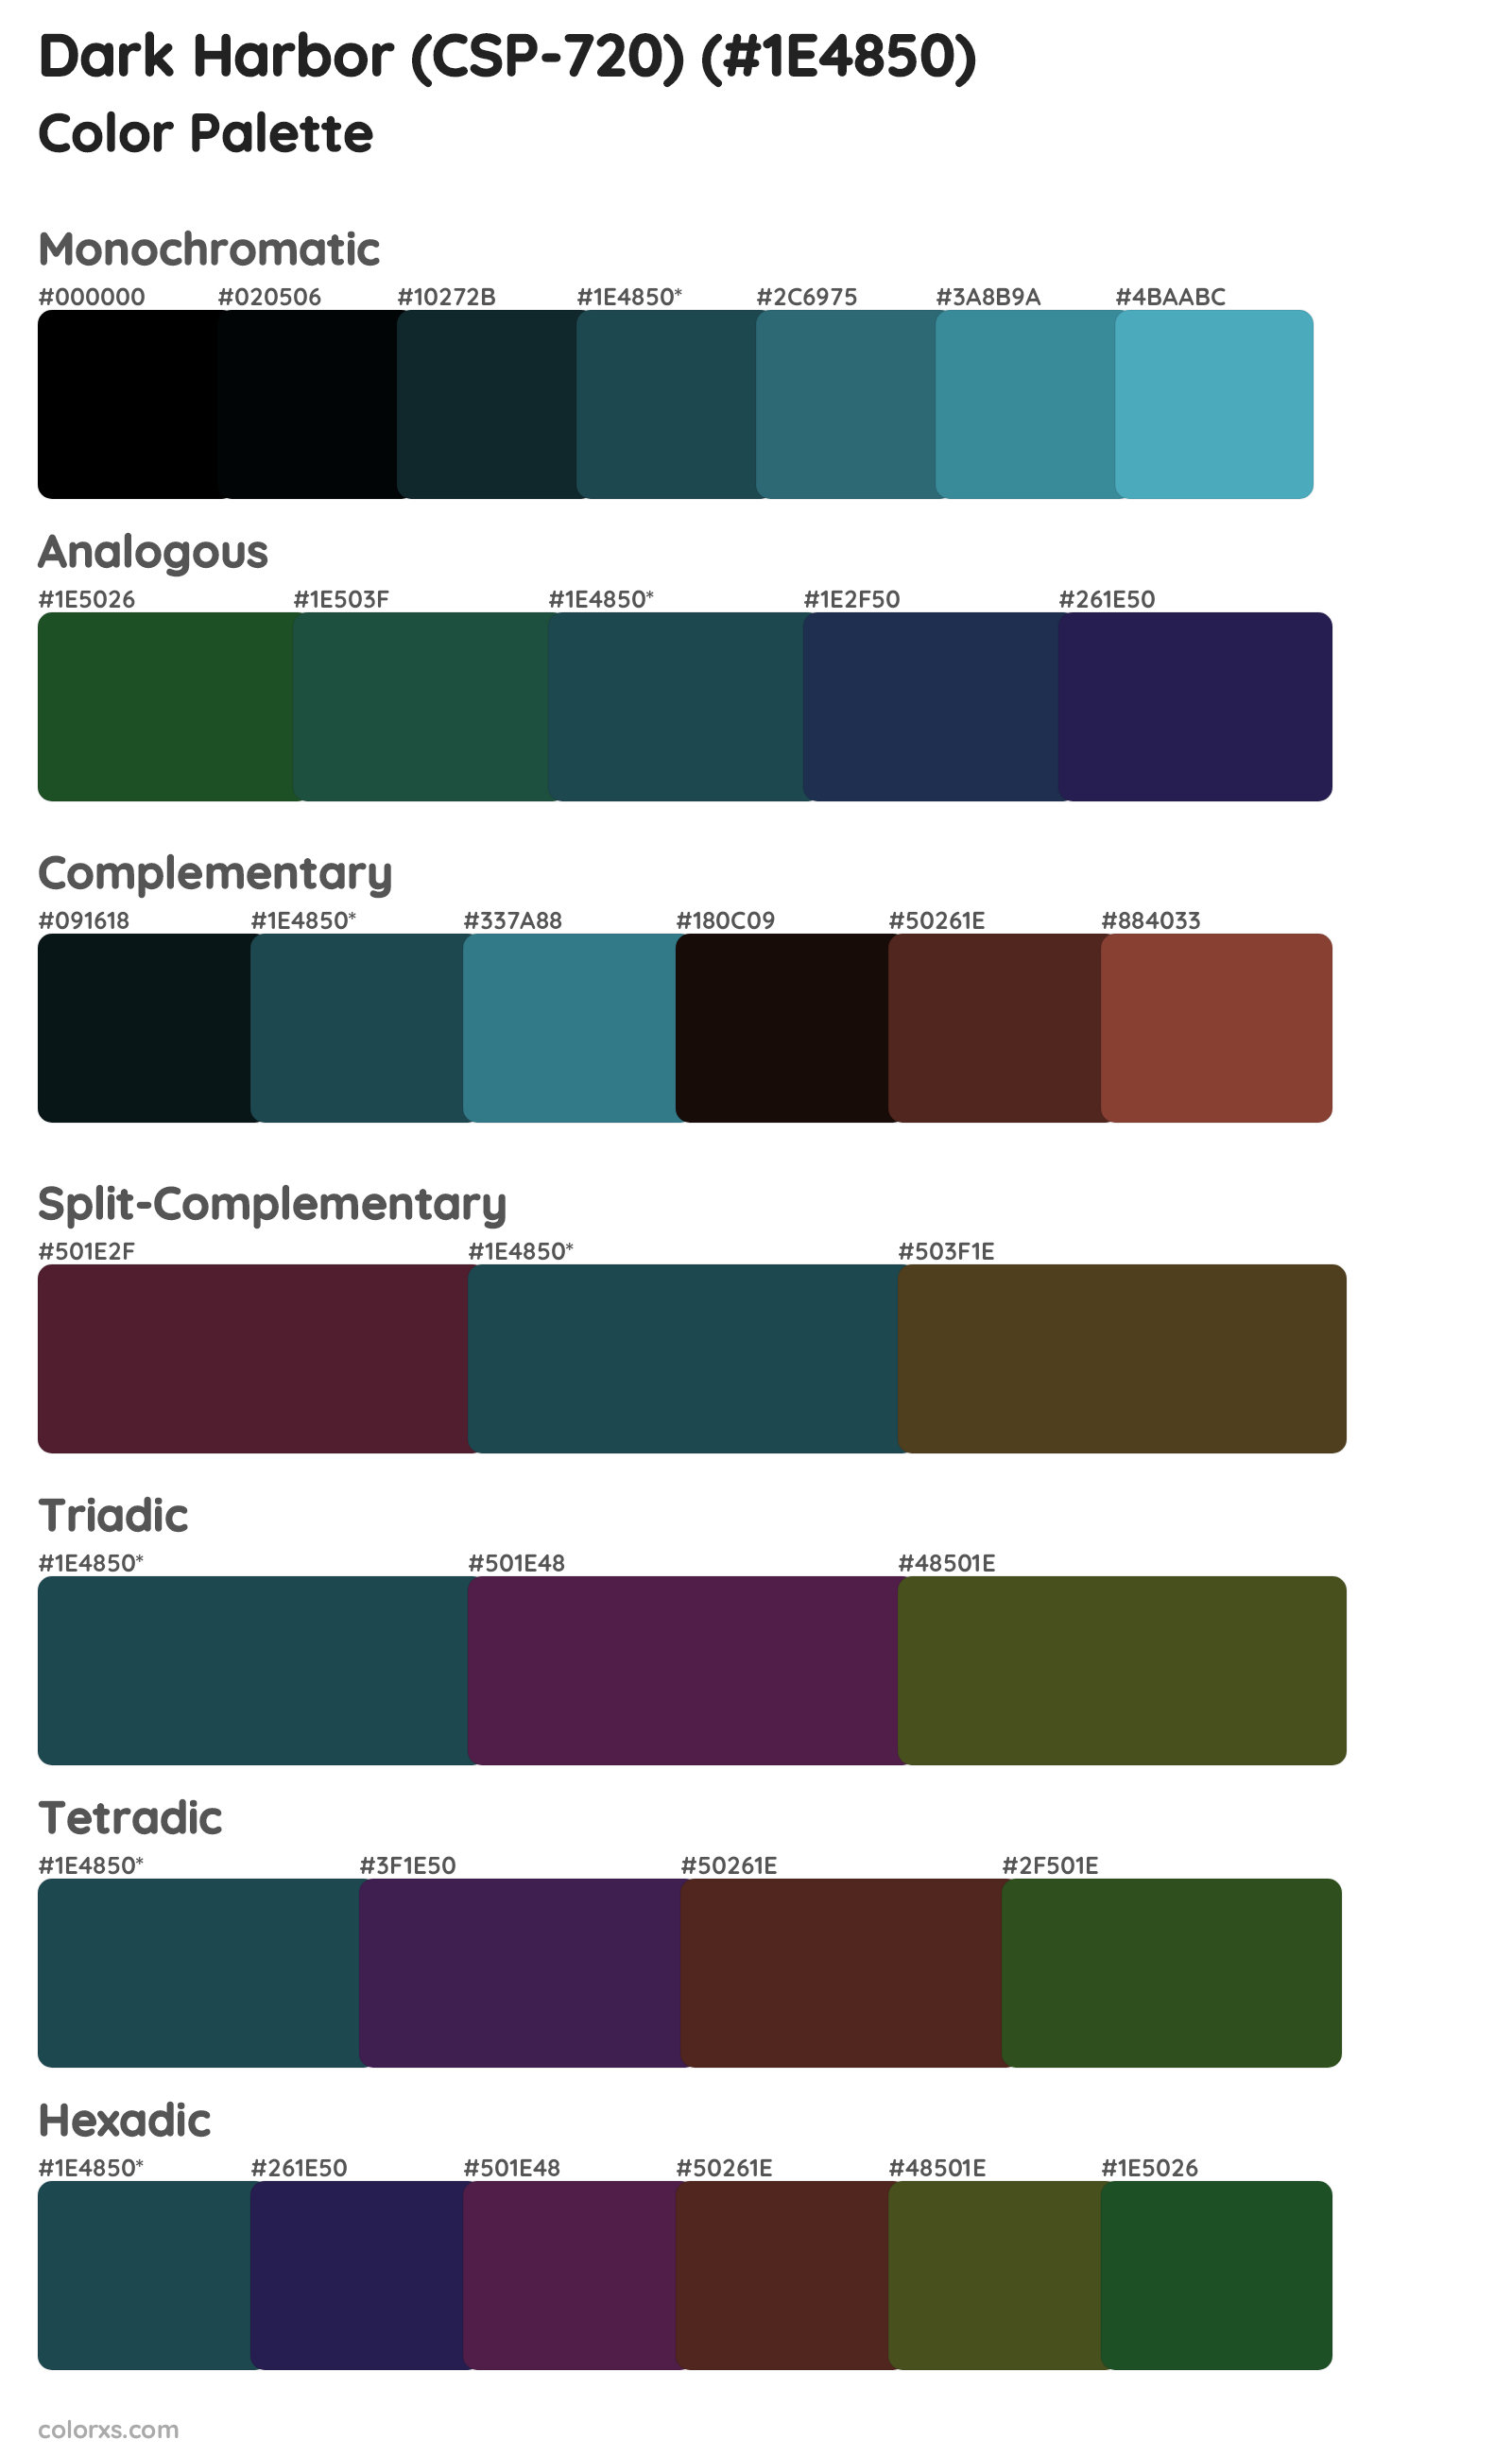 Dark Harbor (CSP-720) Color Scheme Palettes